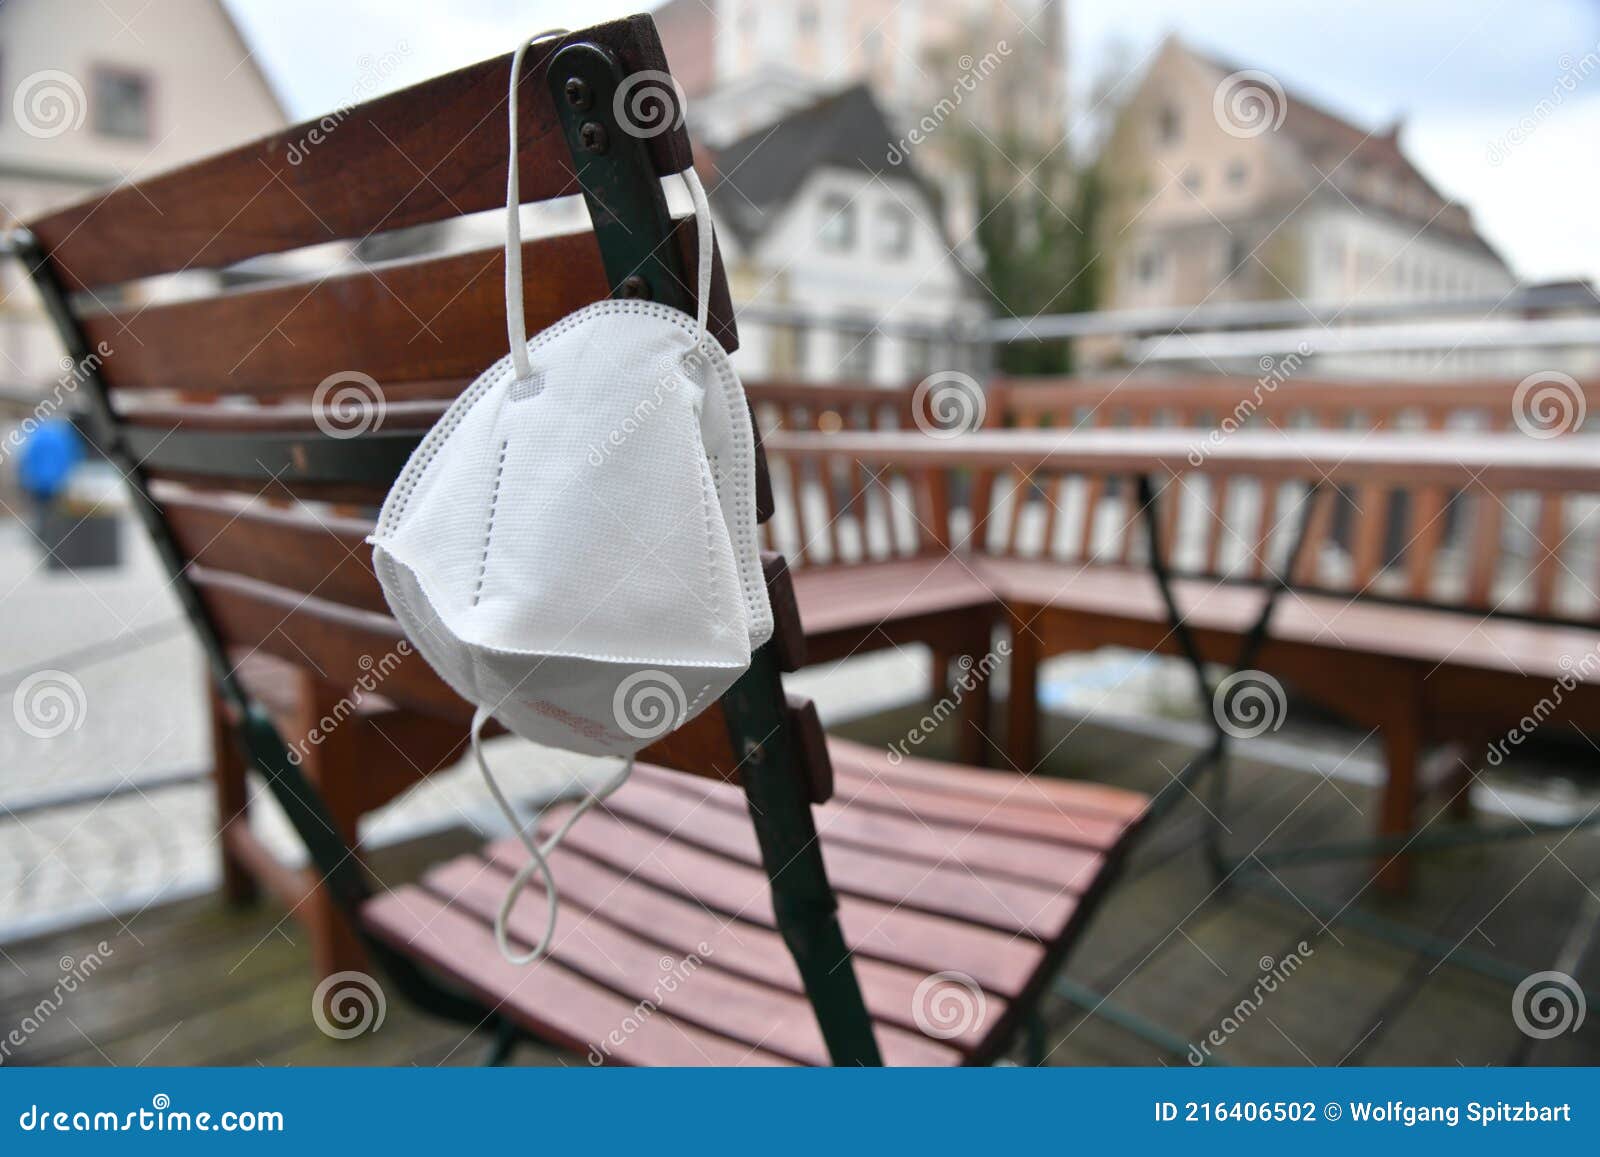 corona crisis - lockdown - ffp2 mask hangs on a chair in an empty beer garden in steyr, austria, europe